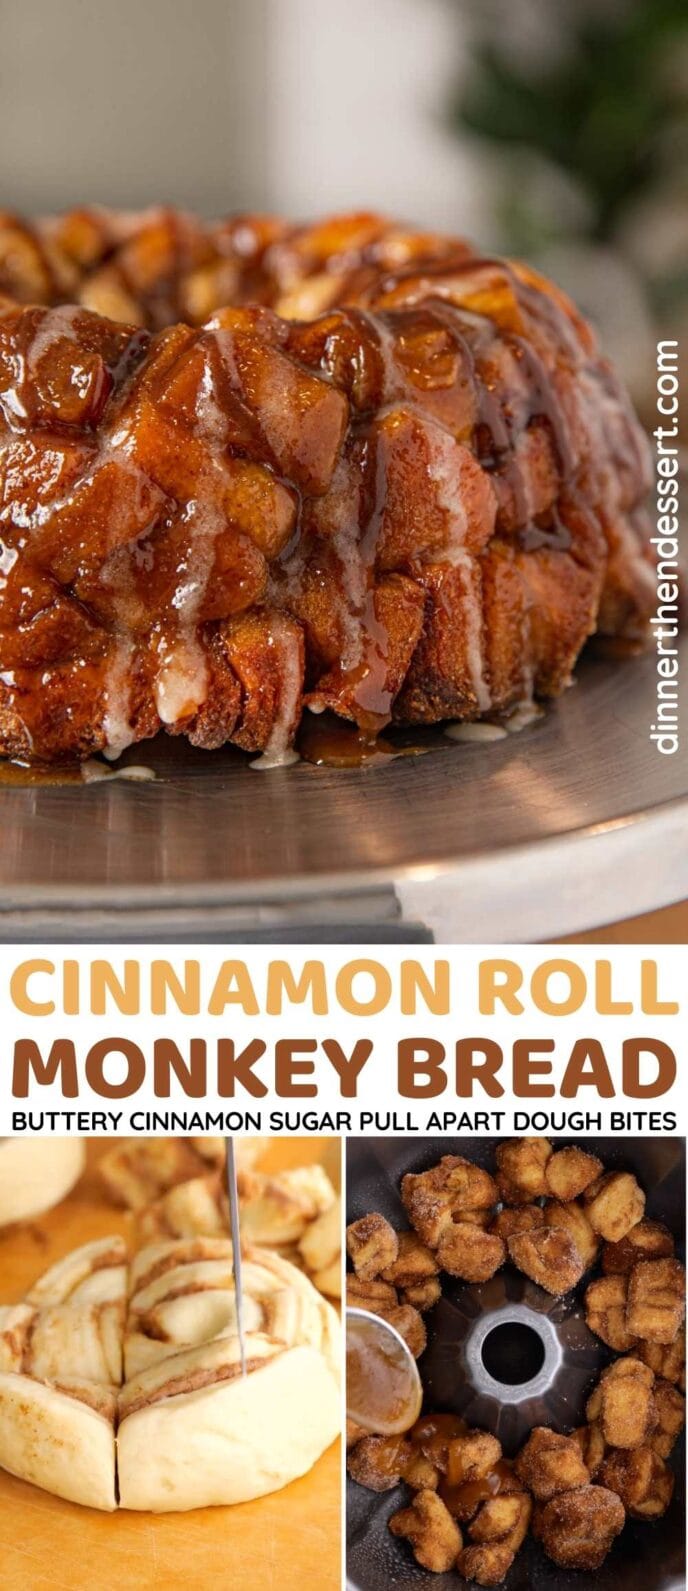 Cinnamon Roll Monkey Bread collage